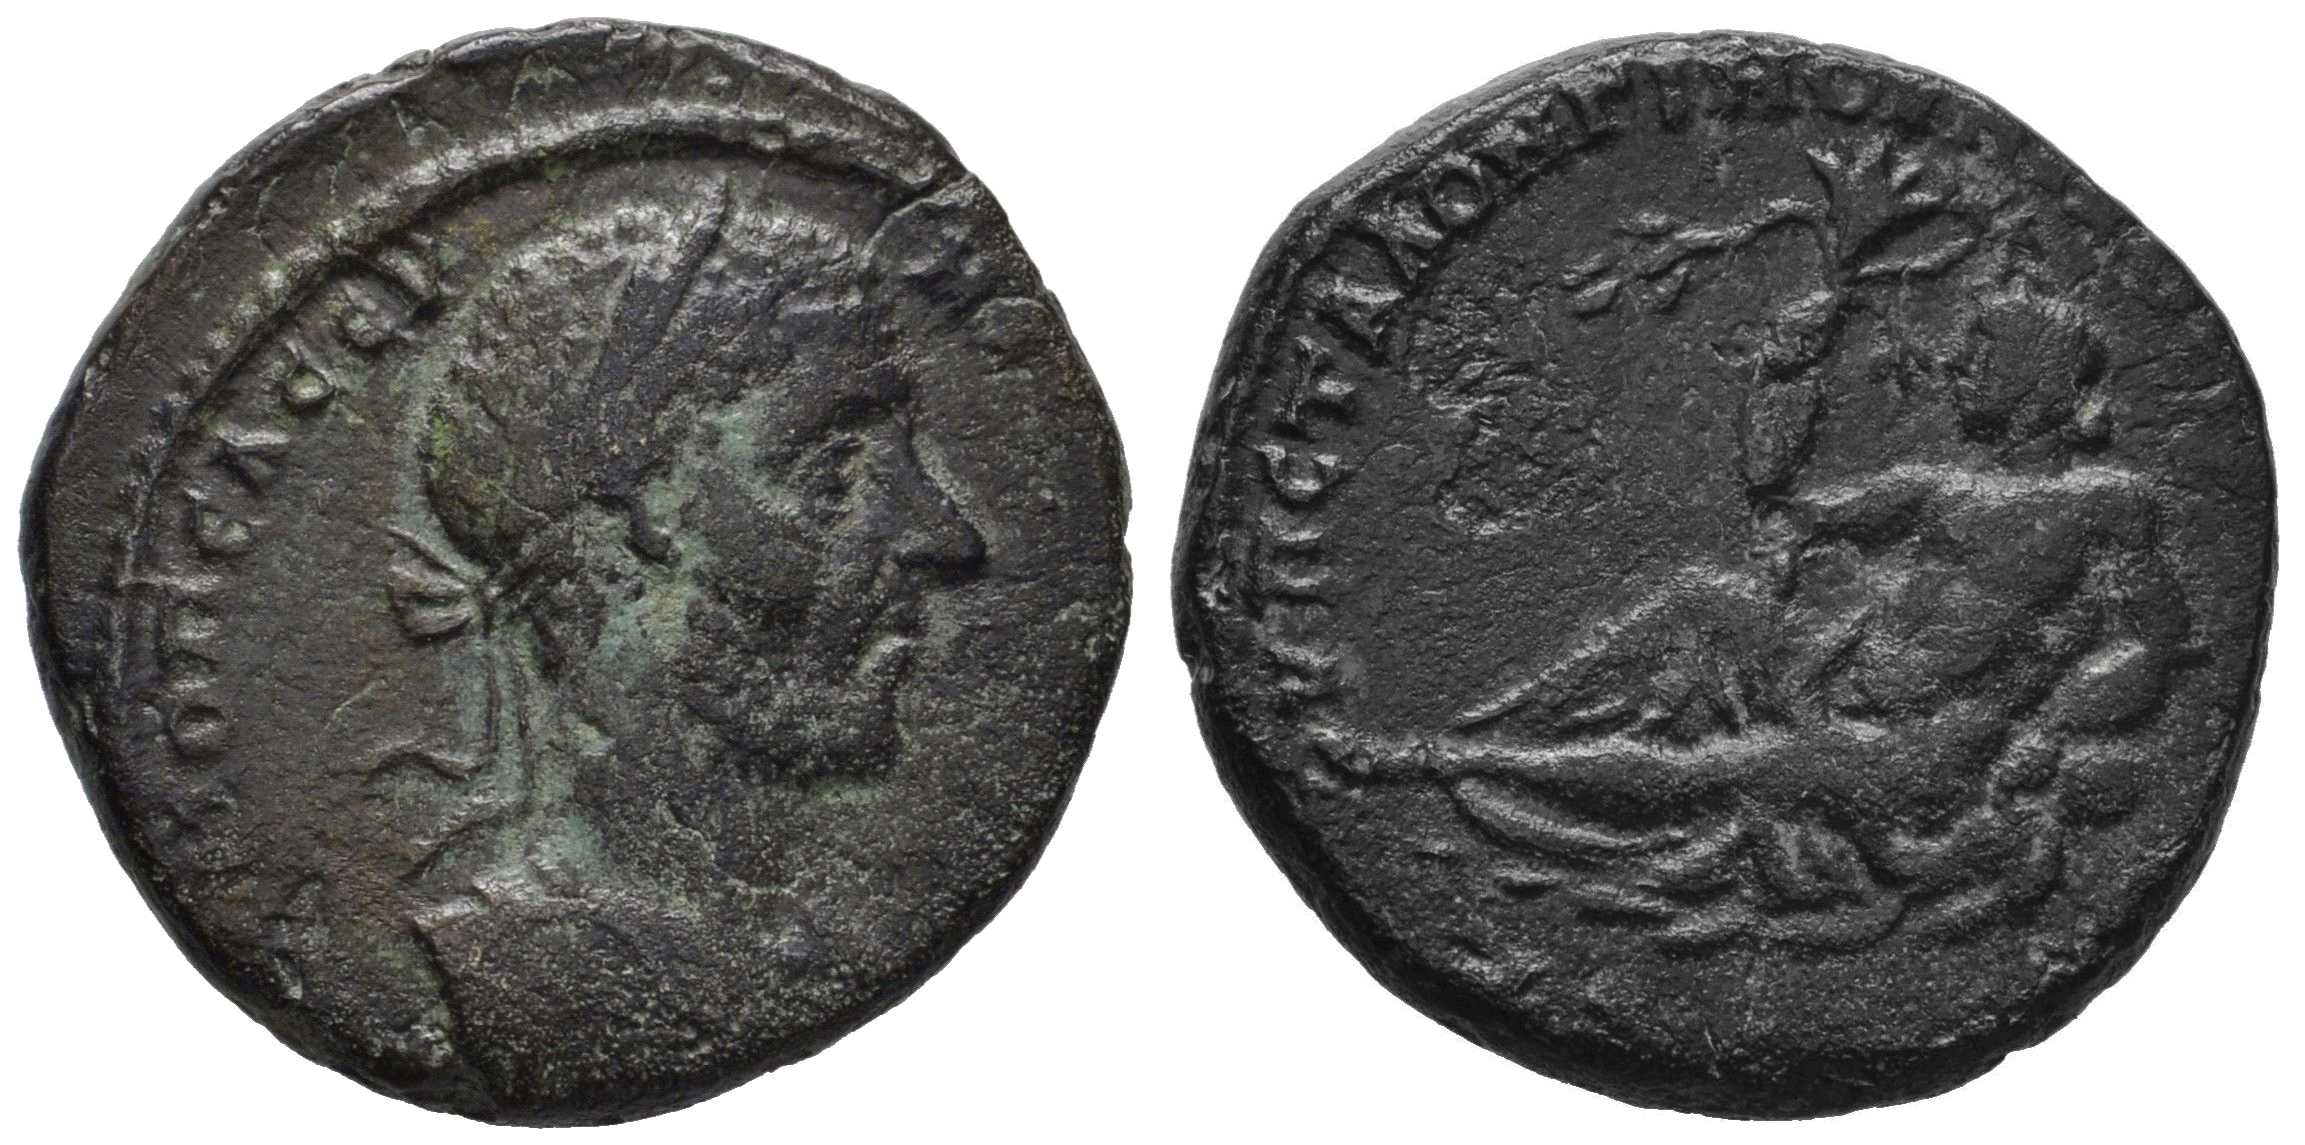 5913 Nicopolis ad Istrum Moesia Inferior Macrinus AE